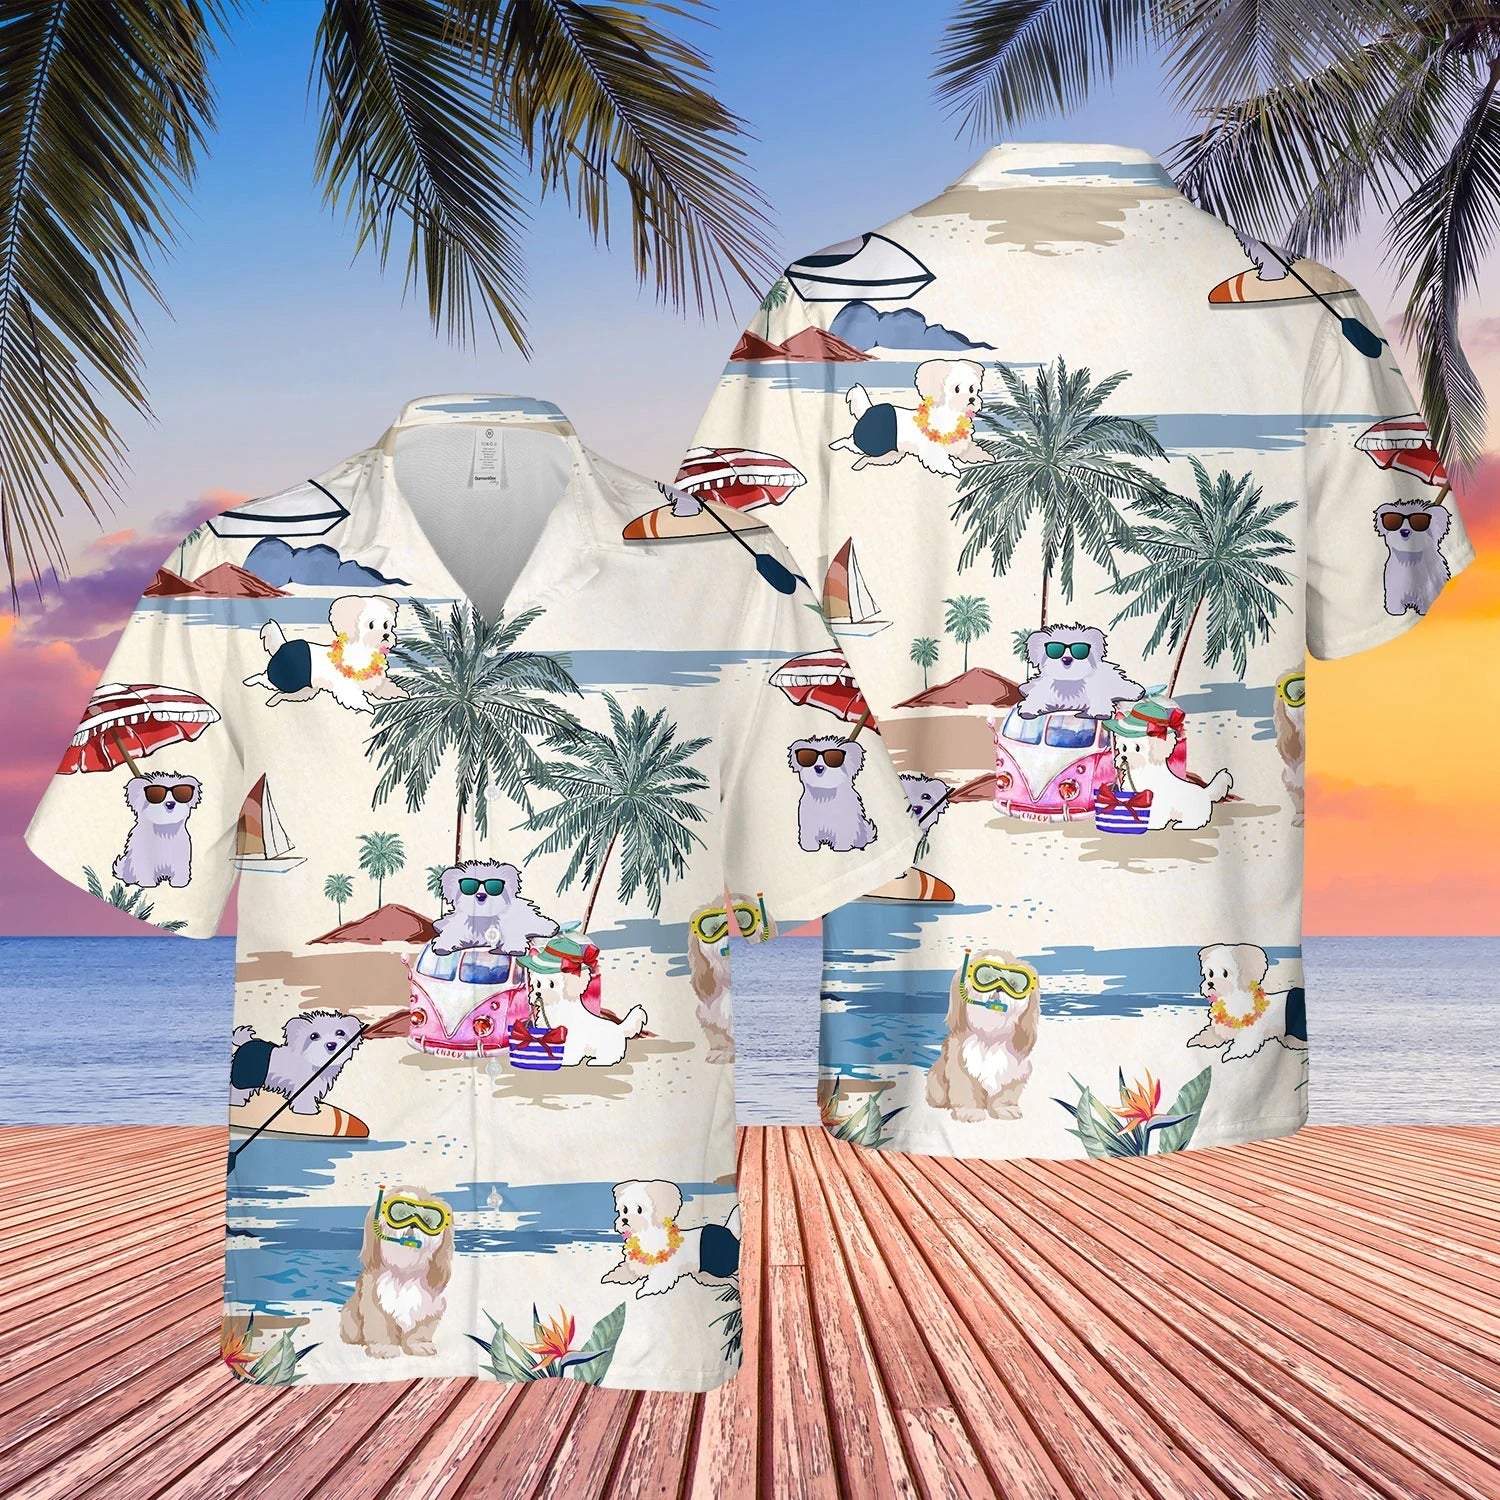 3D Full Printed Dog Summer Beach Hawaiian Shirt/ Hawaii Aloha Shirt For Summer Travel/ Gift To Dog Lovers/ Dog Hawaii Shirt